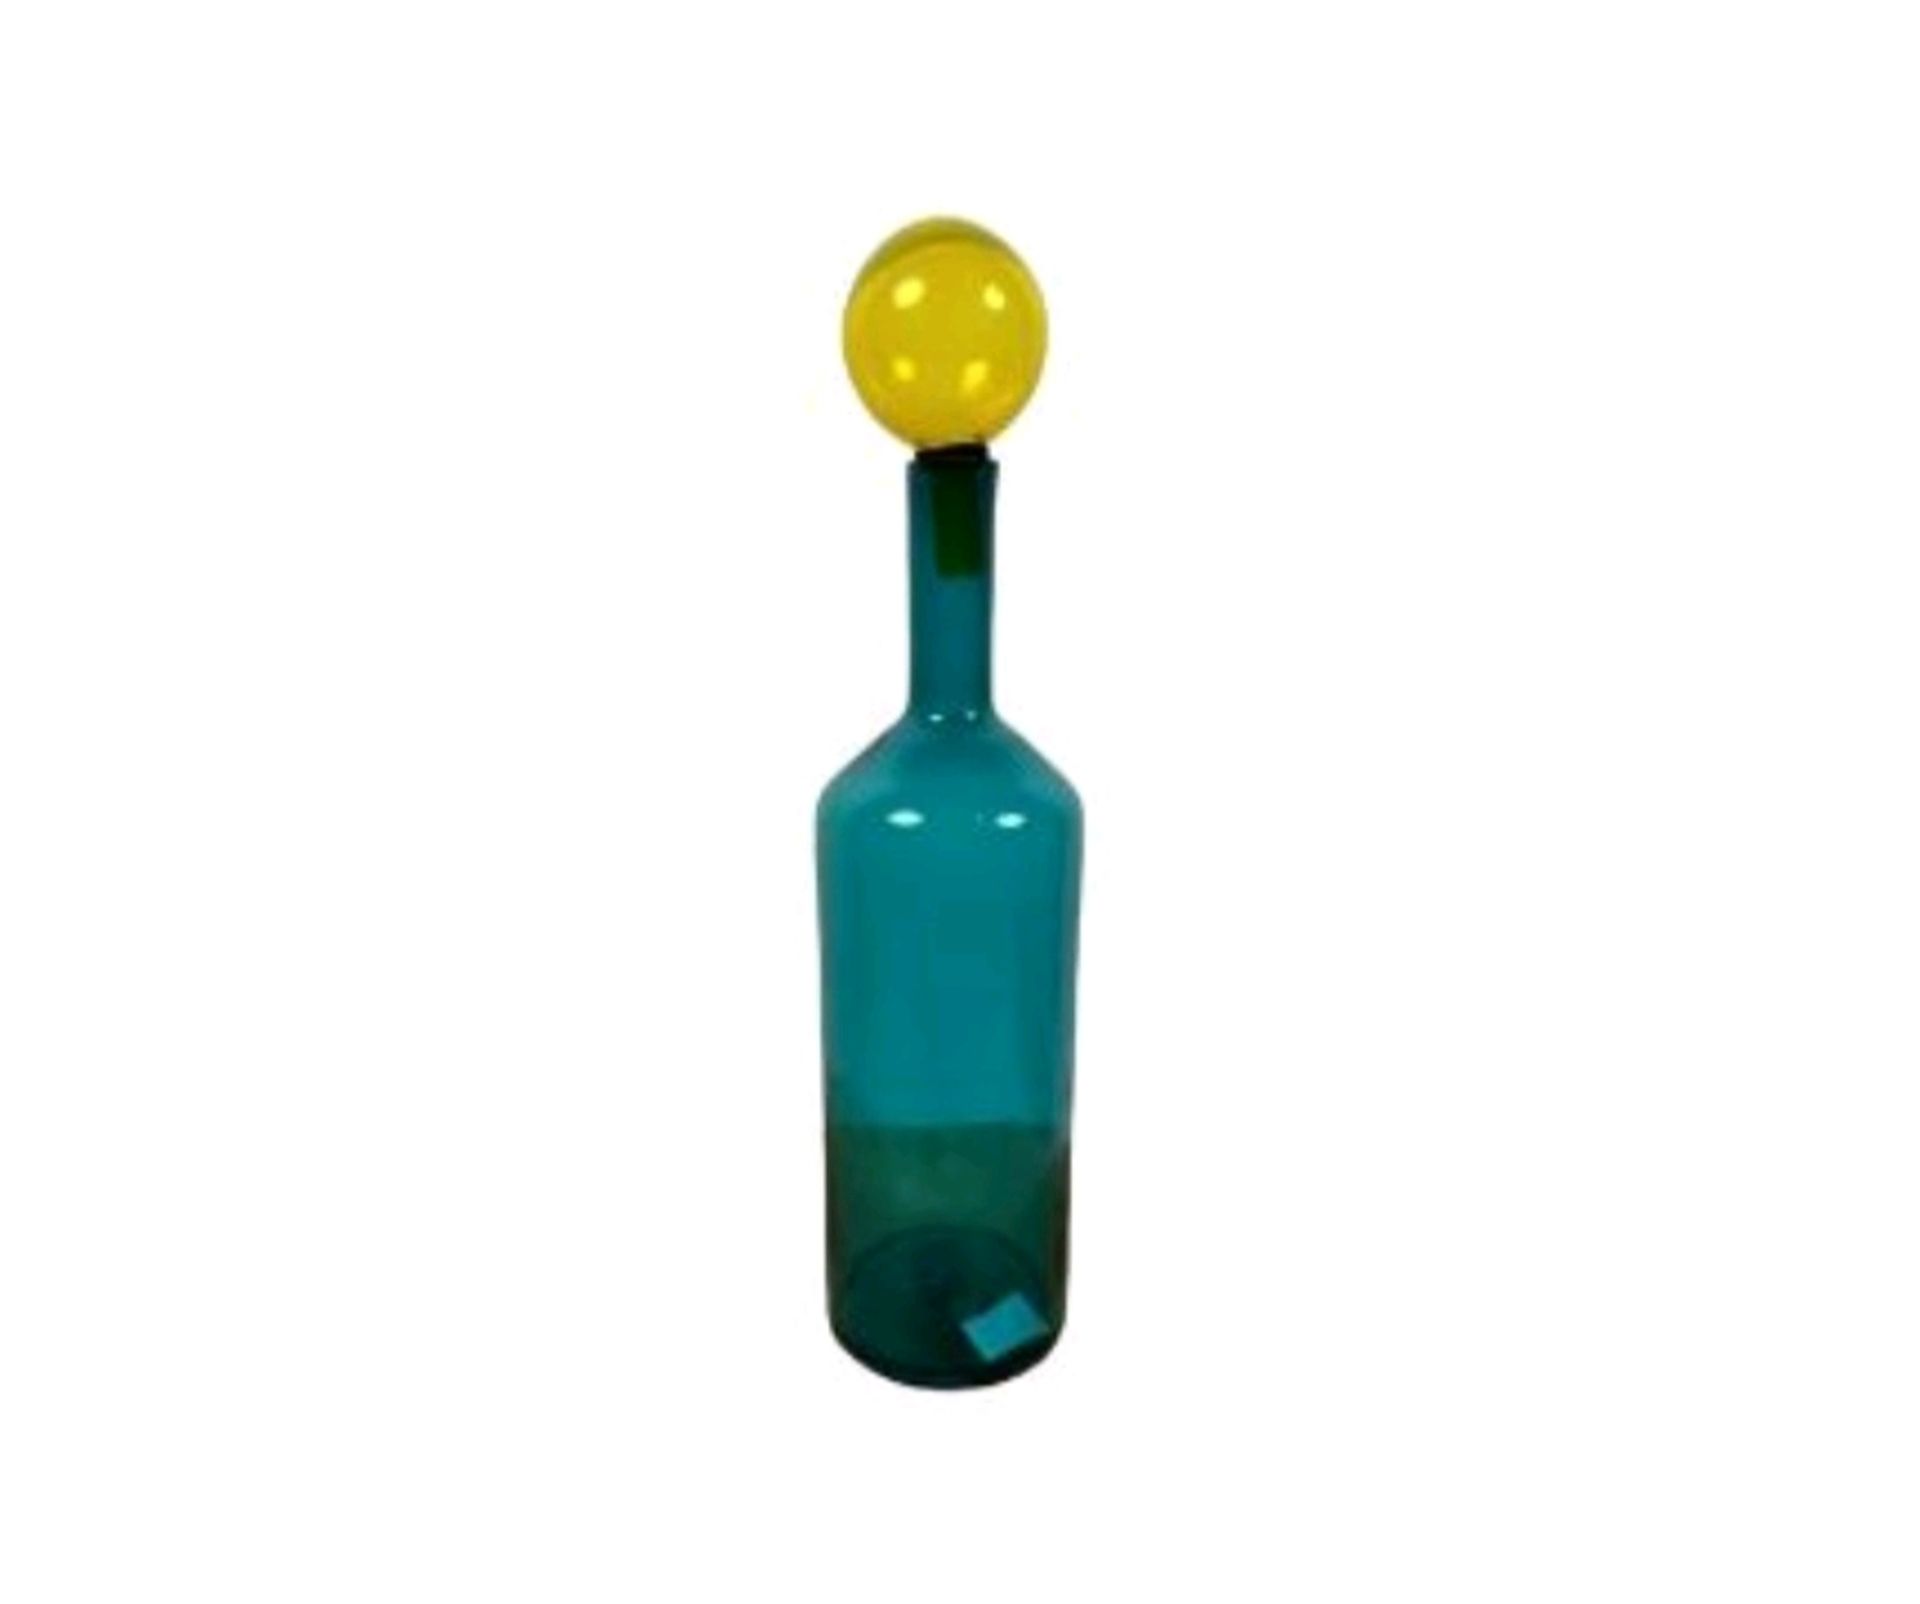 Iconic Pols Potten Bubble Bottle - Image 3 of 3